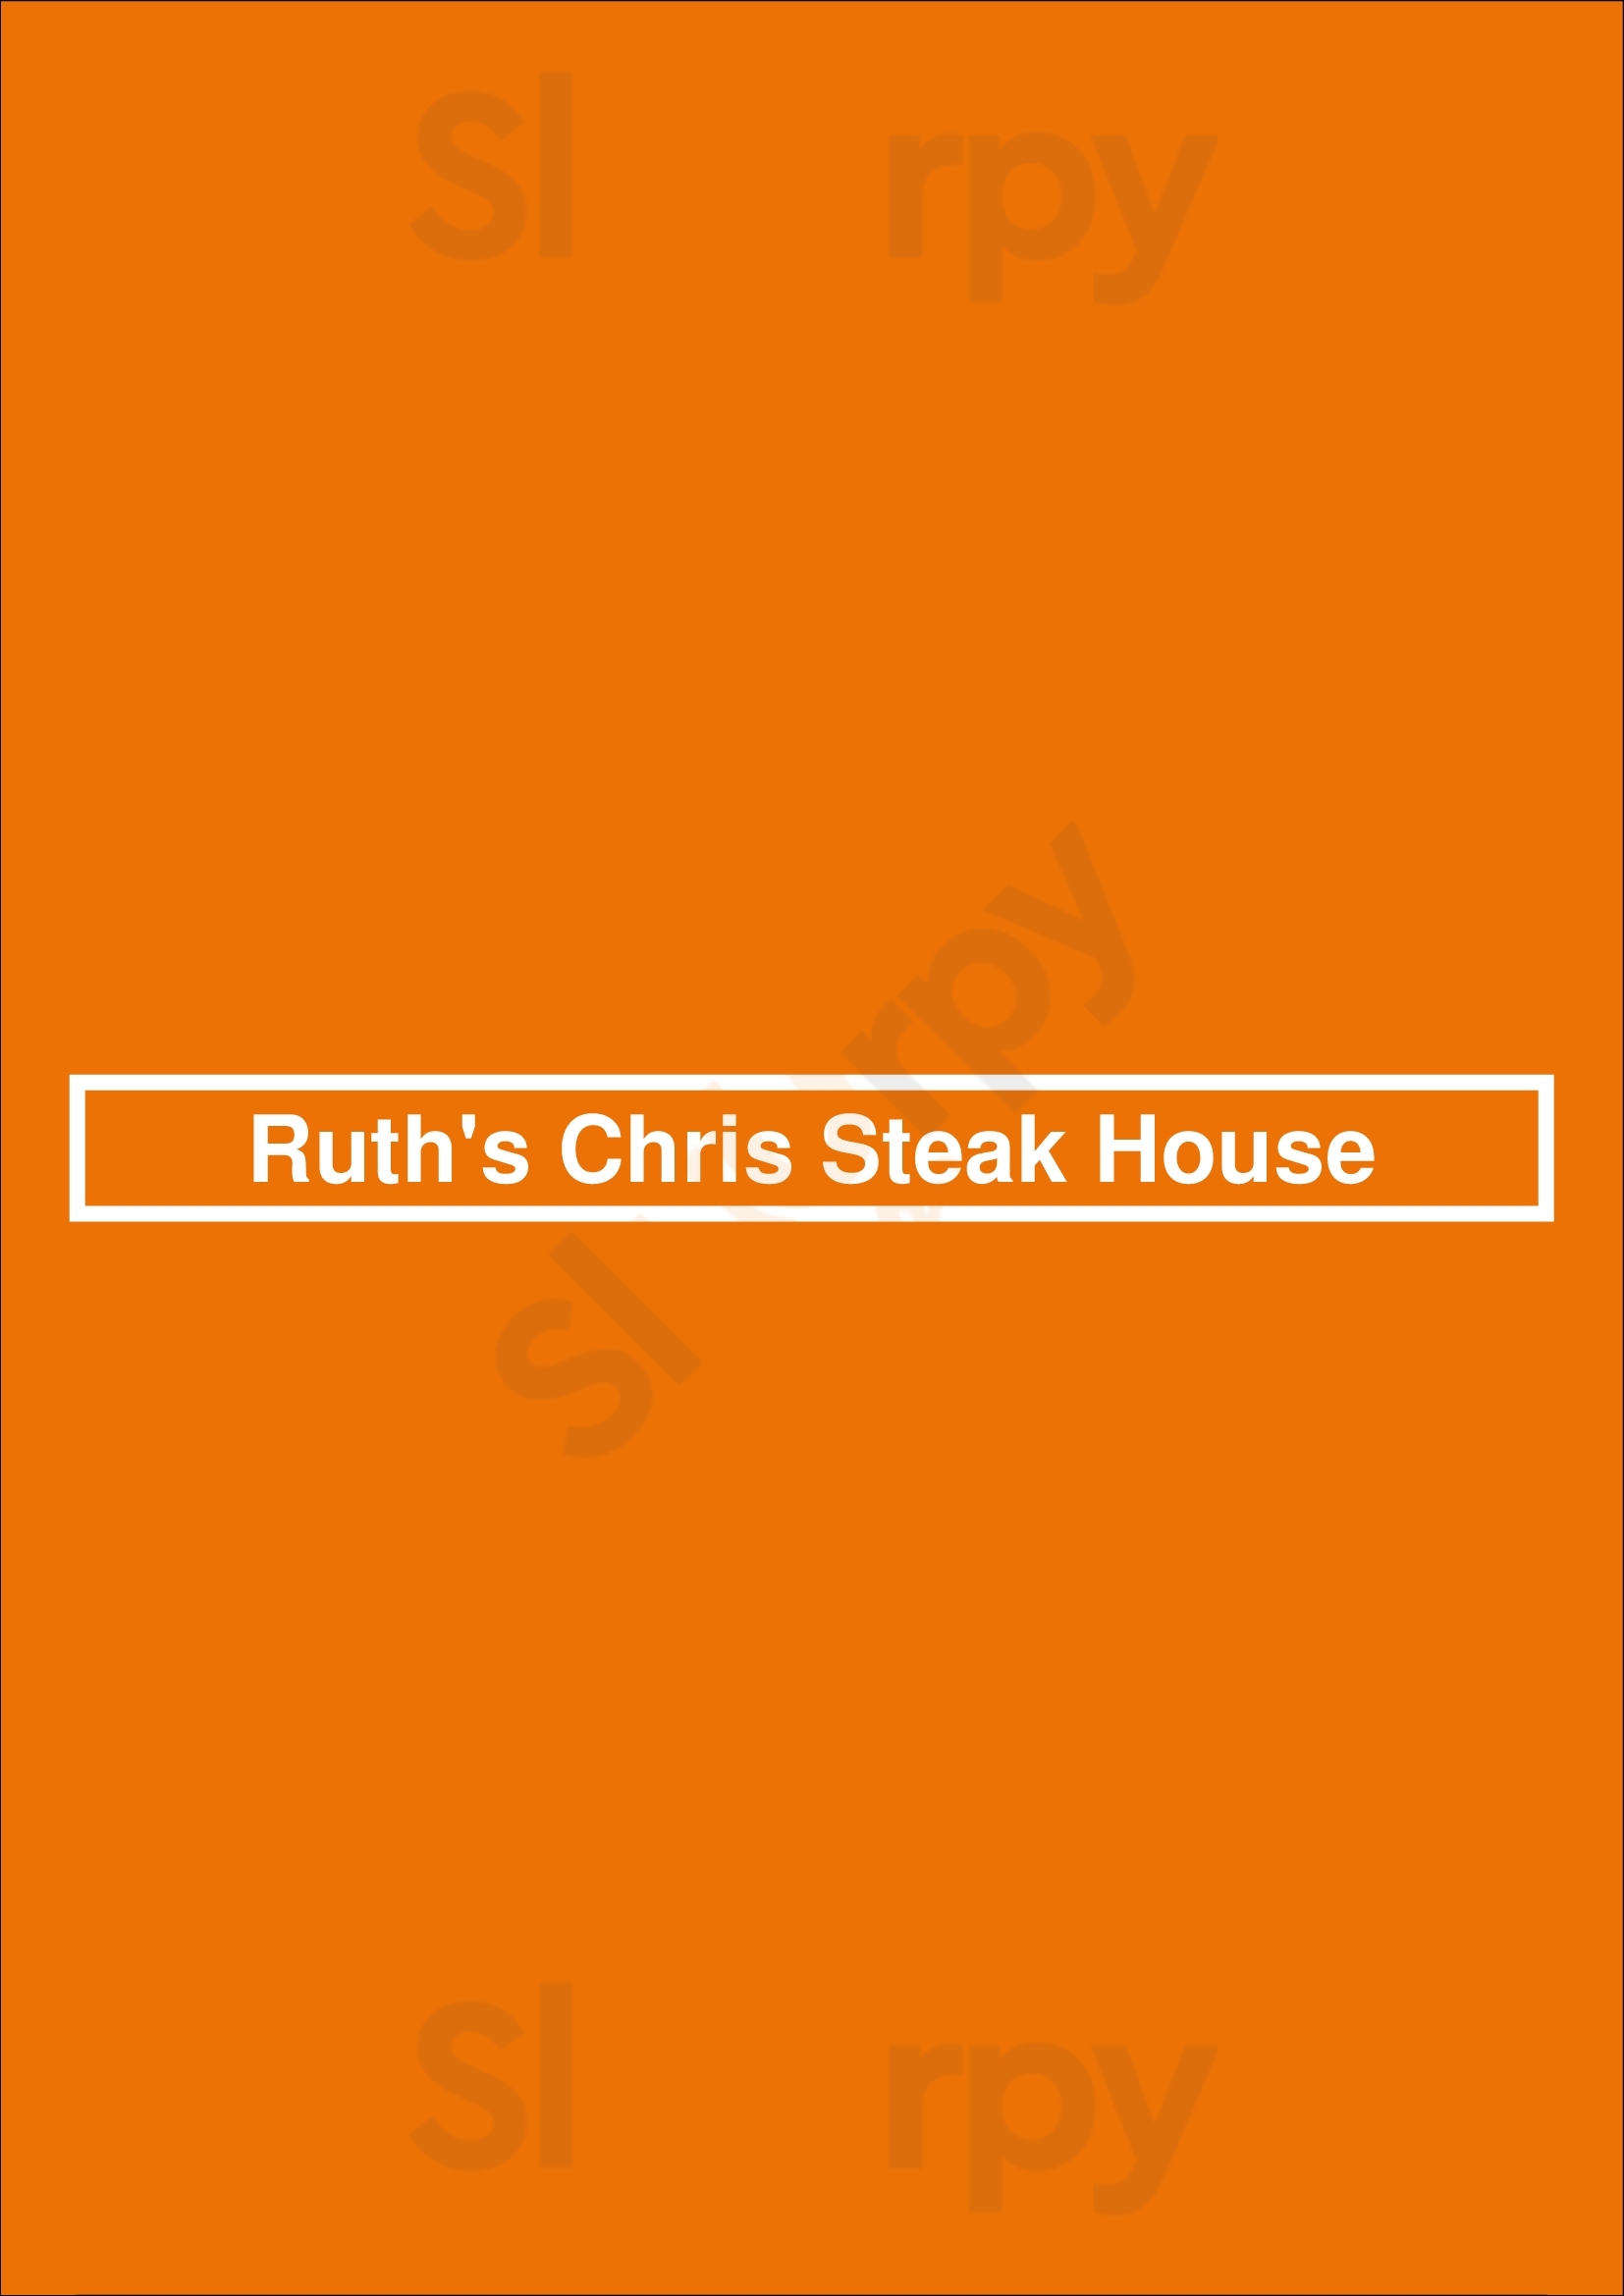 Ruth's Chris Steak House Louisville Menu - 1